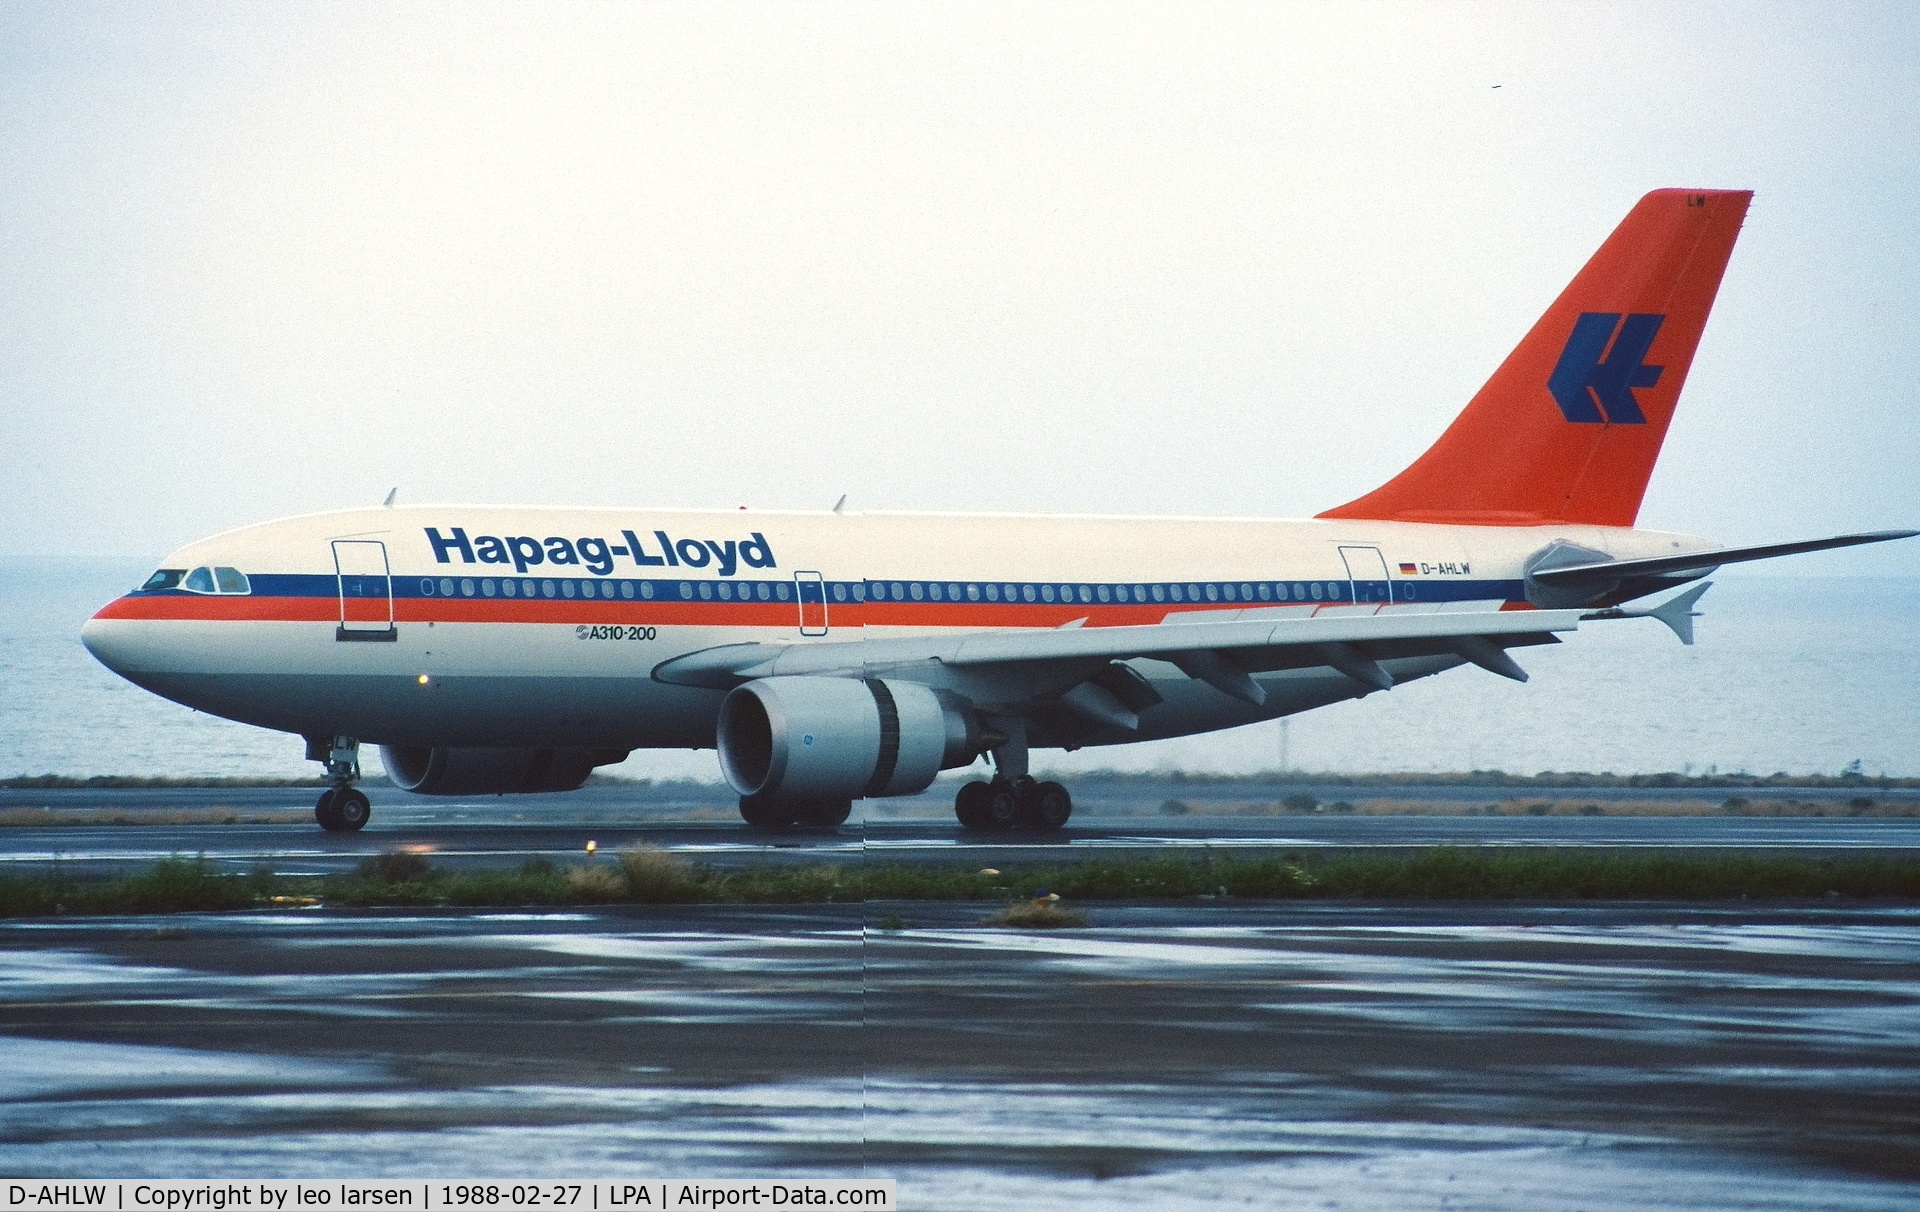 D-AHLW, 1986 Airbus A310-204 C/N 427, Las Palmas 27.2.1988